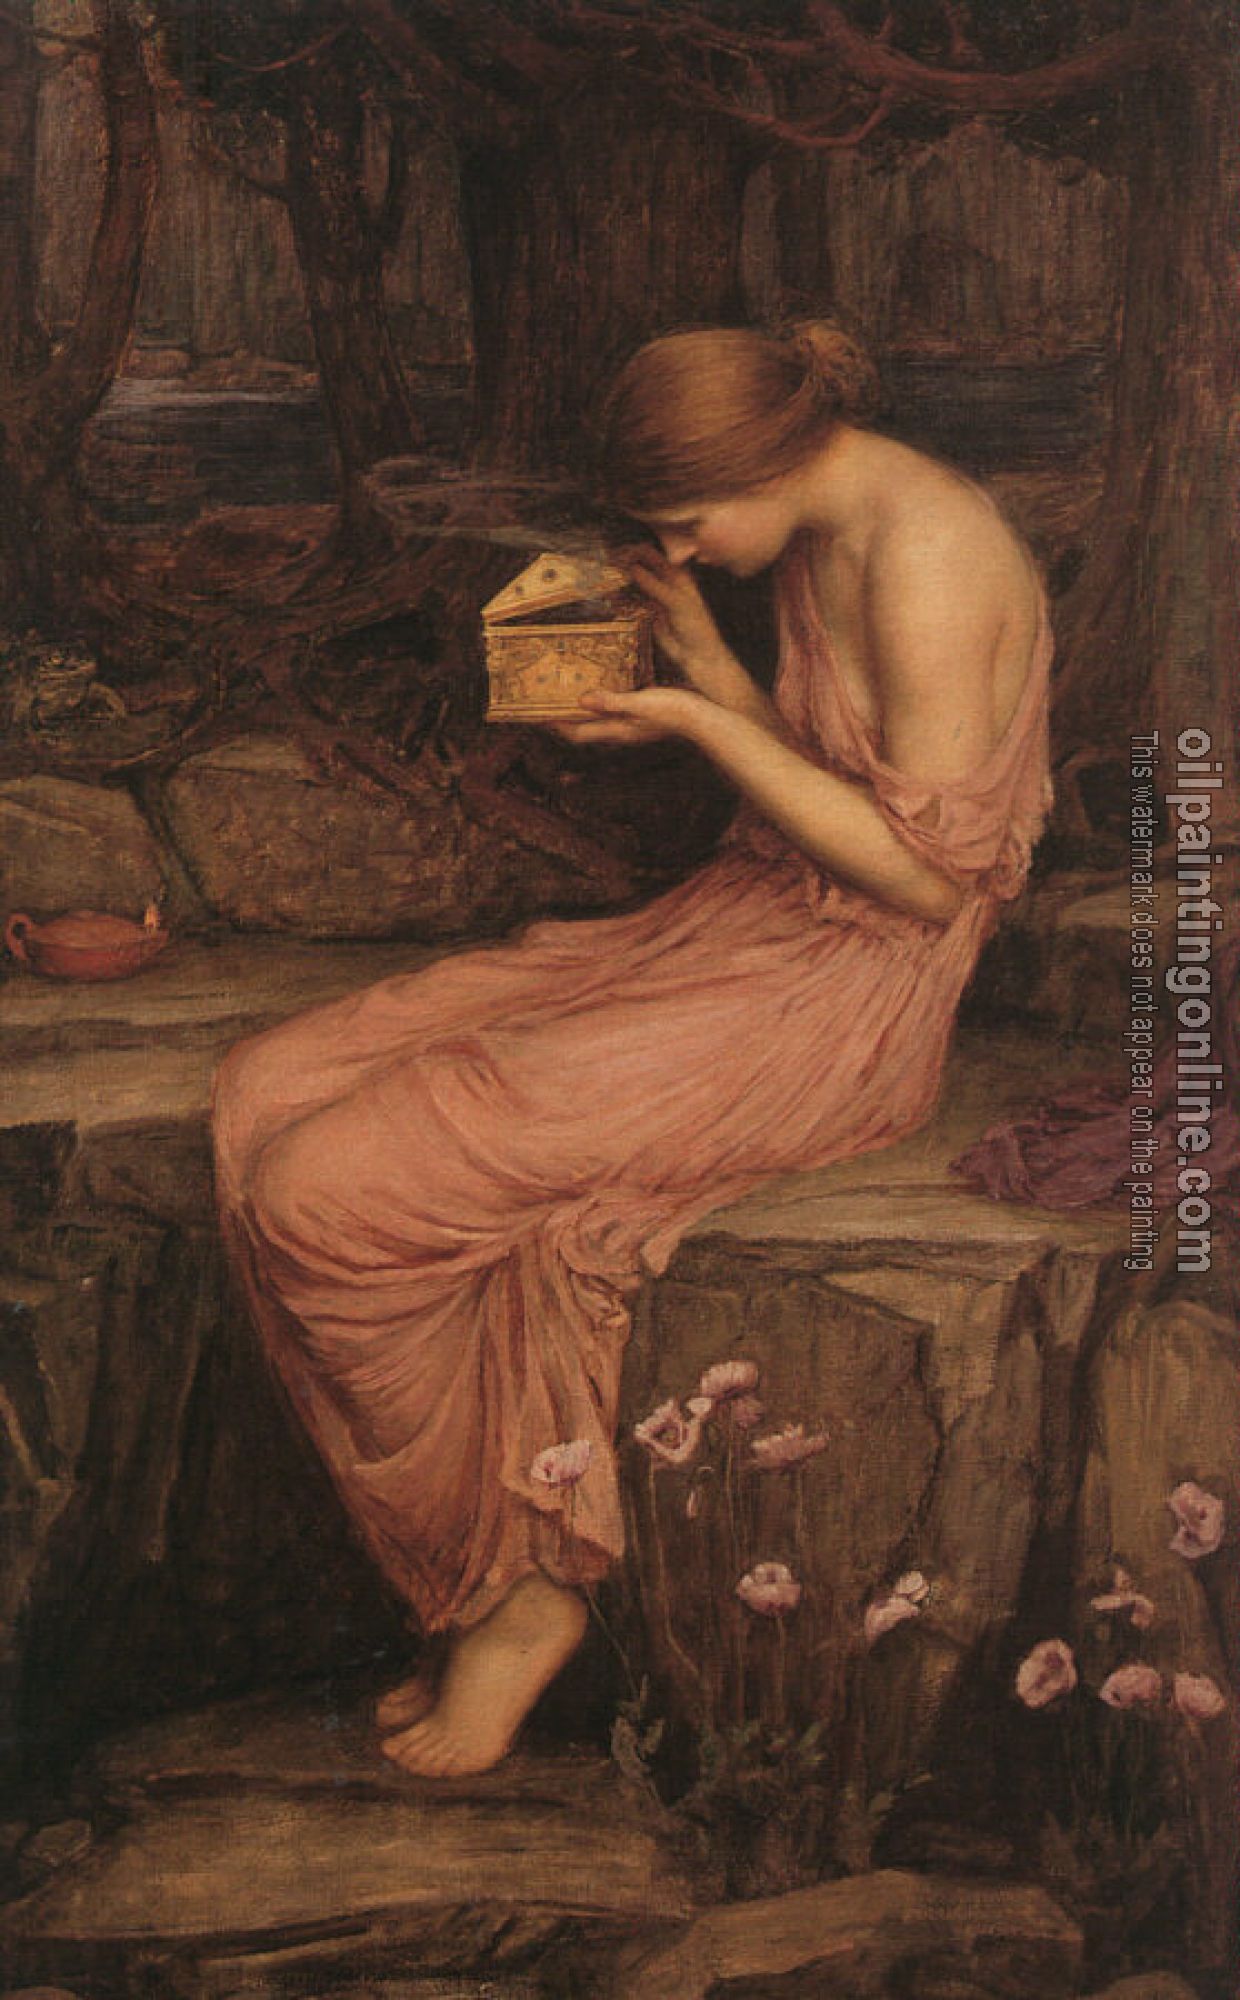 Waterhouse, John William - Psyche Opening the Golden Box